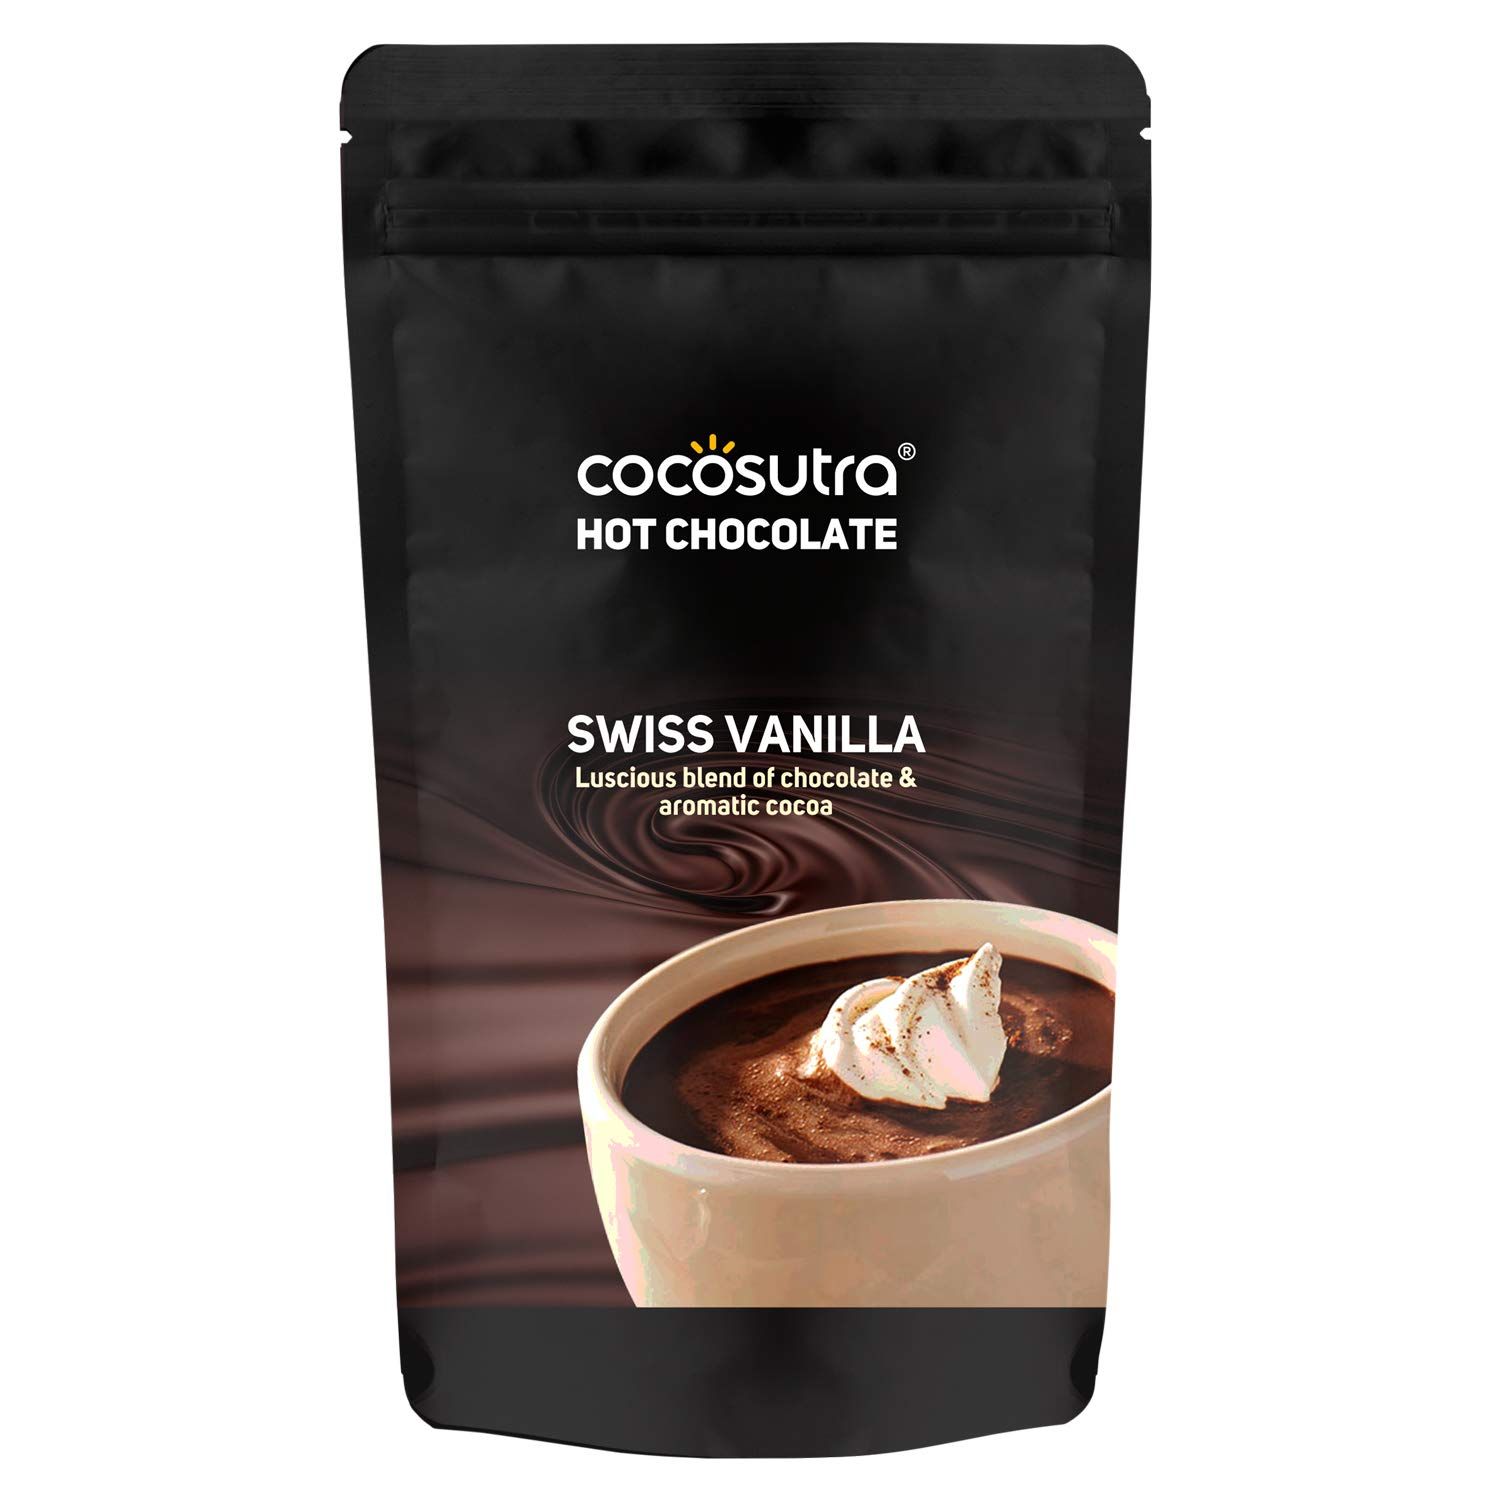 Cocosutra Hot Chocolate Swiss Vanilla Image